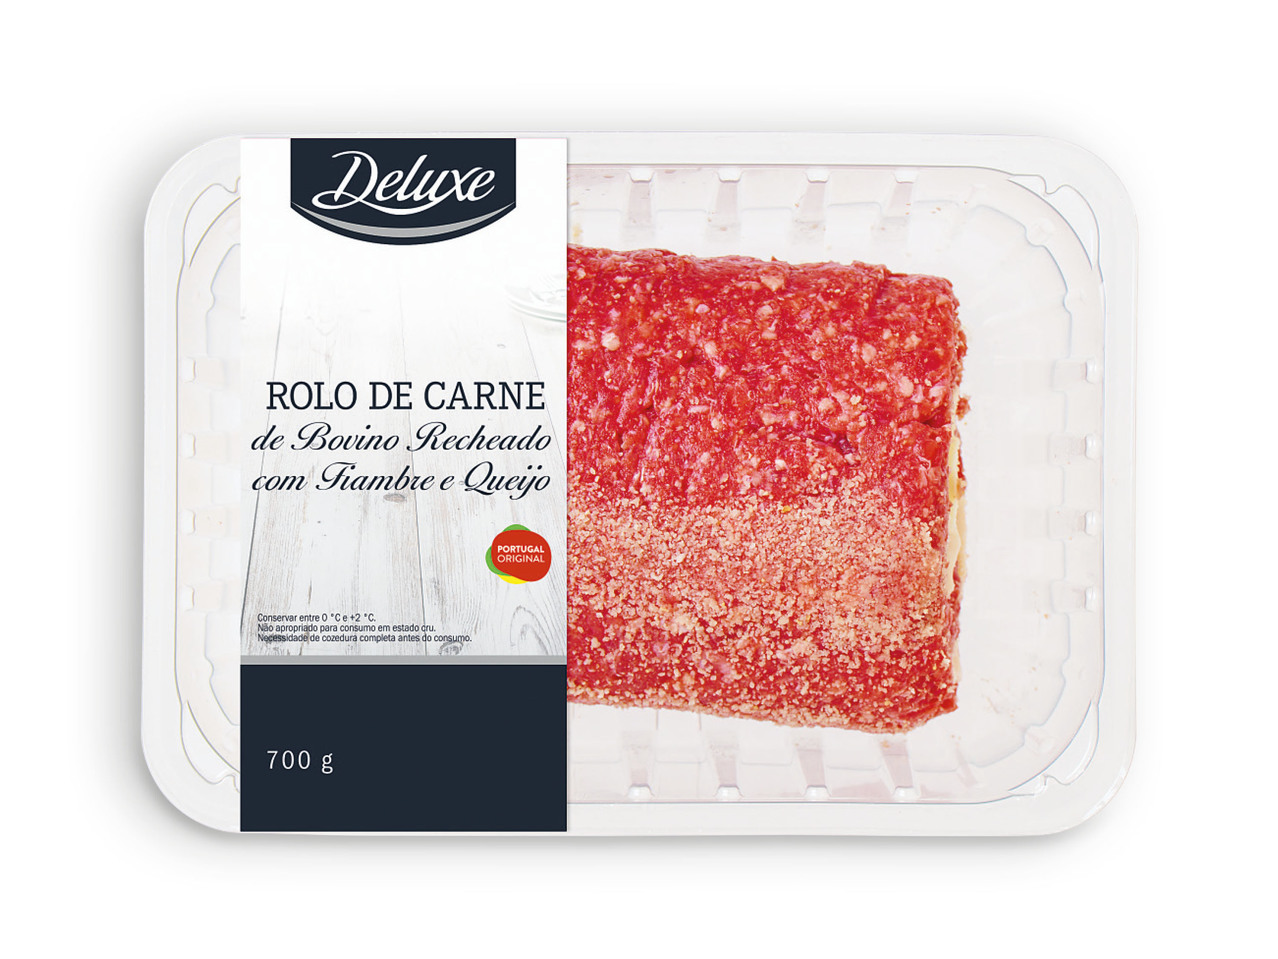 DELUXE(R) Rolo de Carne de Bovino com Queijo e Fiambre